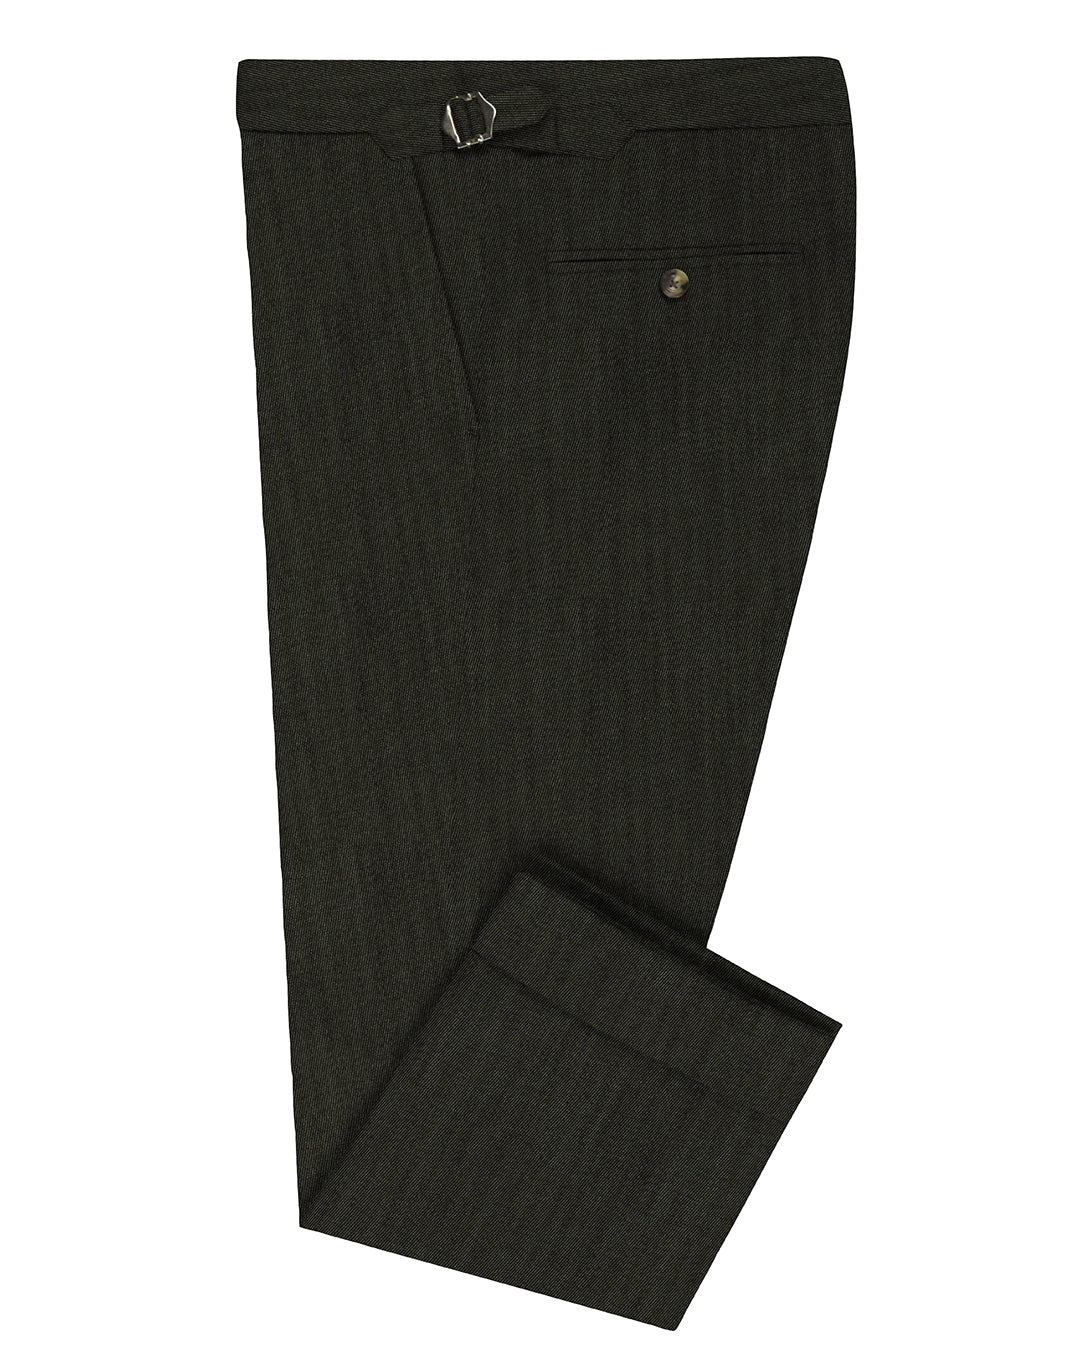 VBC: Brown Grey Twill Suit